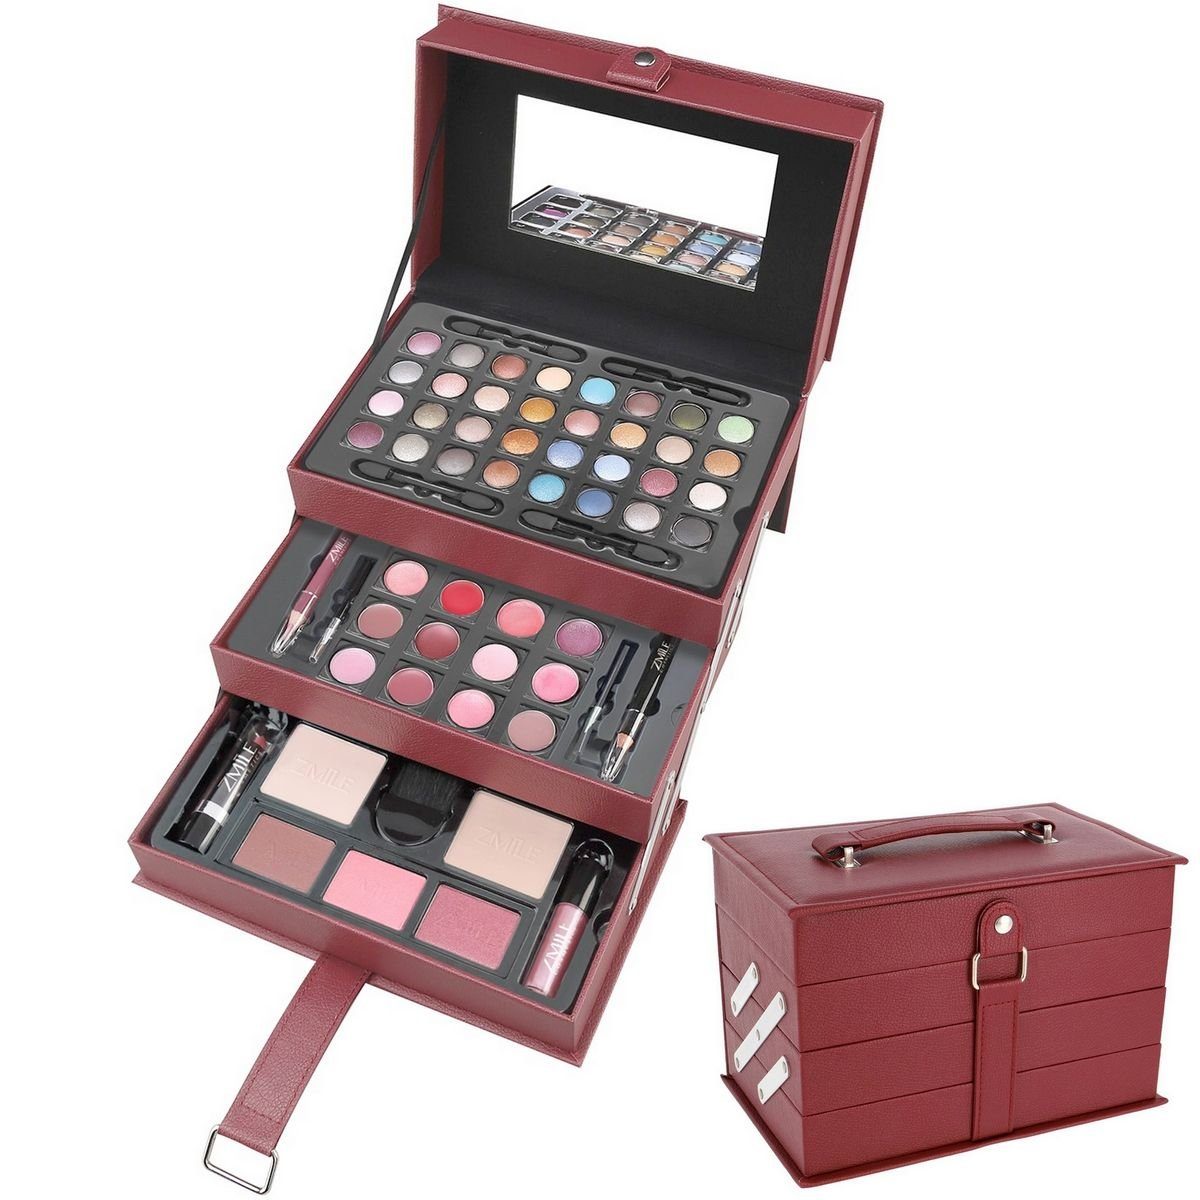 ZMILE COSMETICS Kosmetik-Koffer 61 teiliges Exclusives Beautycase Schminkkoffer Leder-Optik wine red